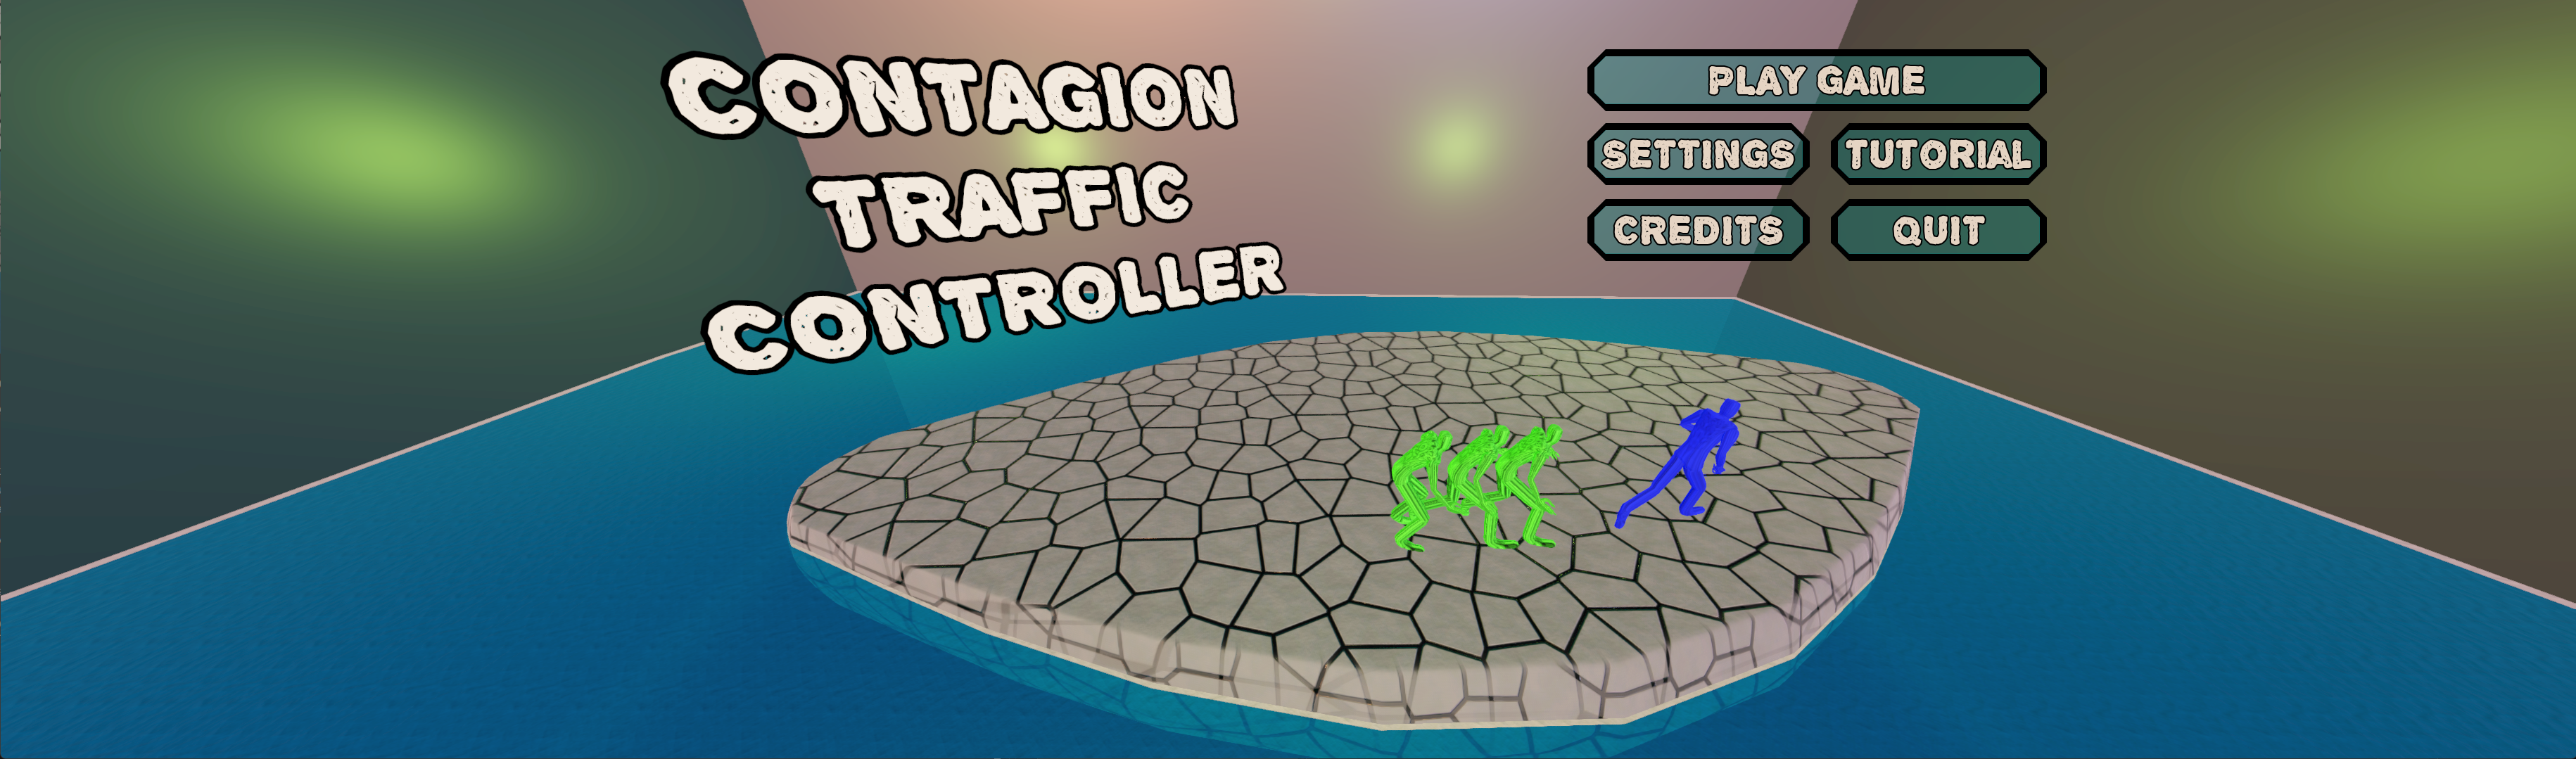 contagion-traffic-controller